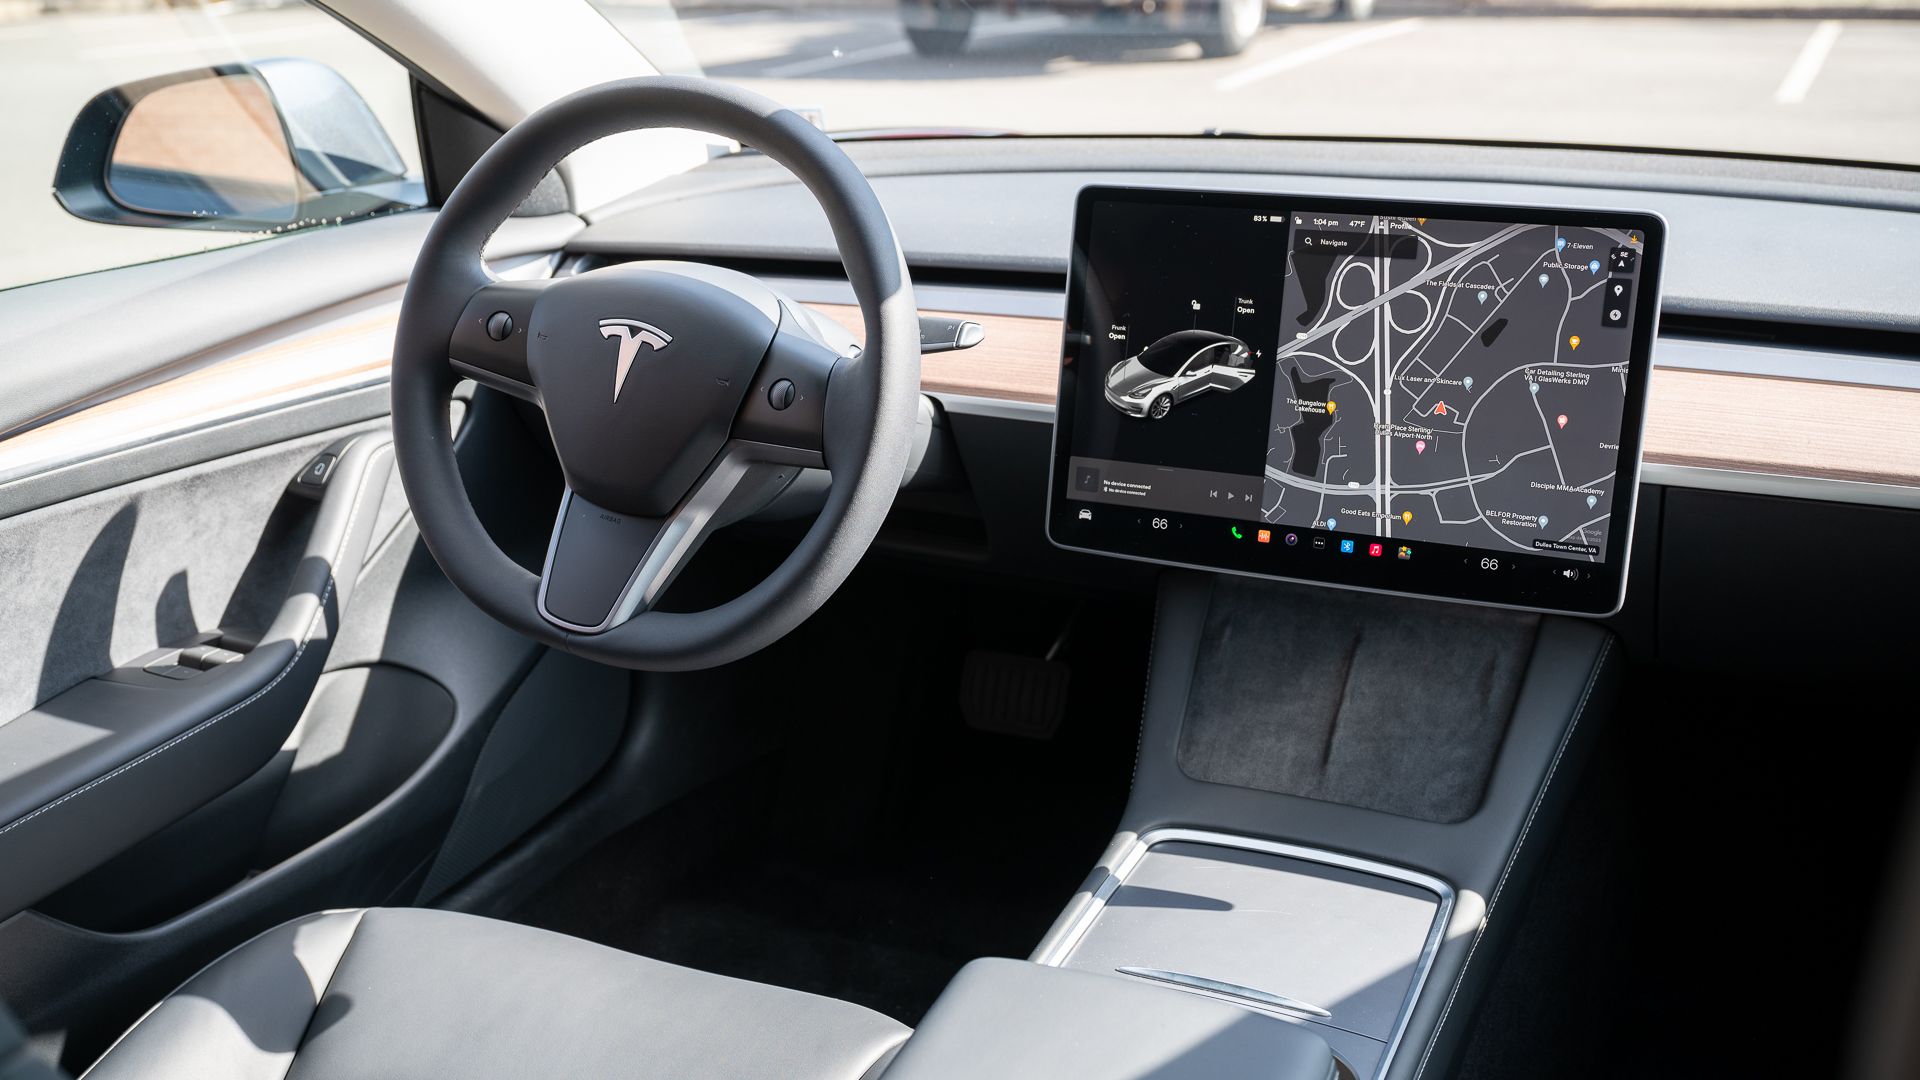 Door handle, steering wheel, infotainment display, wireless chargers, and storage inside the Tesla Model 3